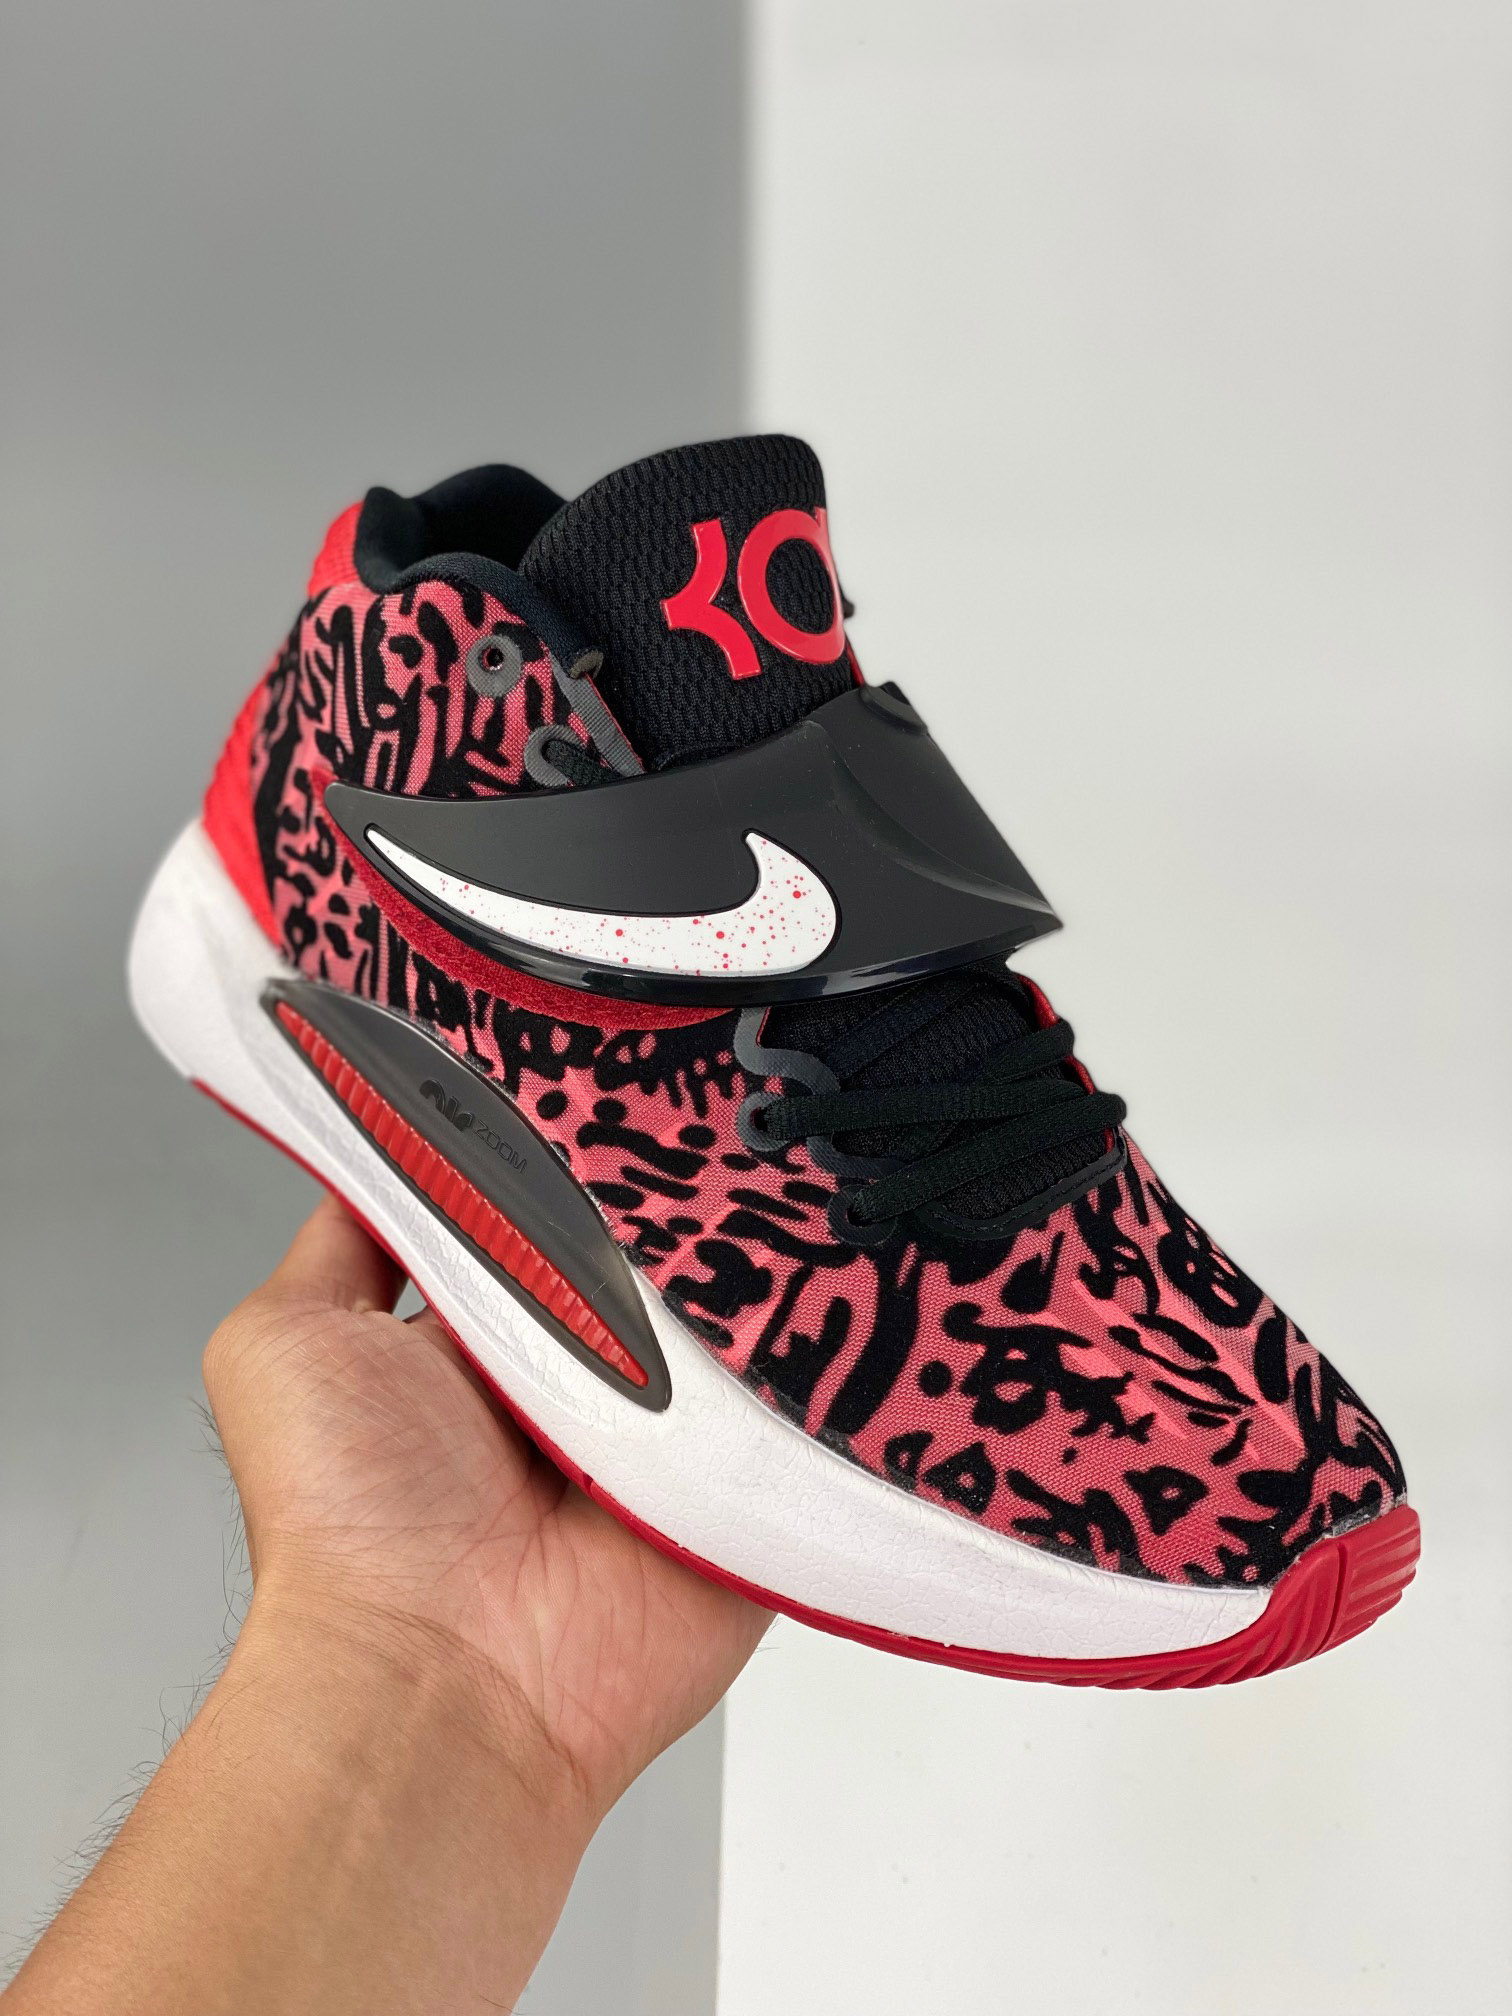 Nike KD 14 "Bred" CW3935-006 Shoes